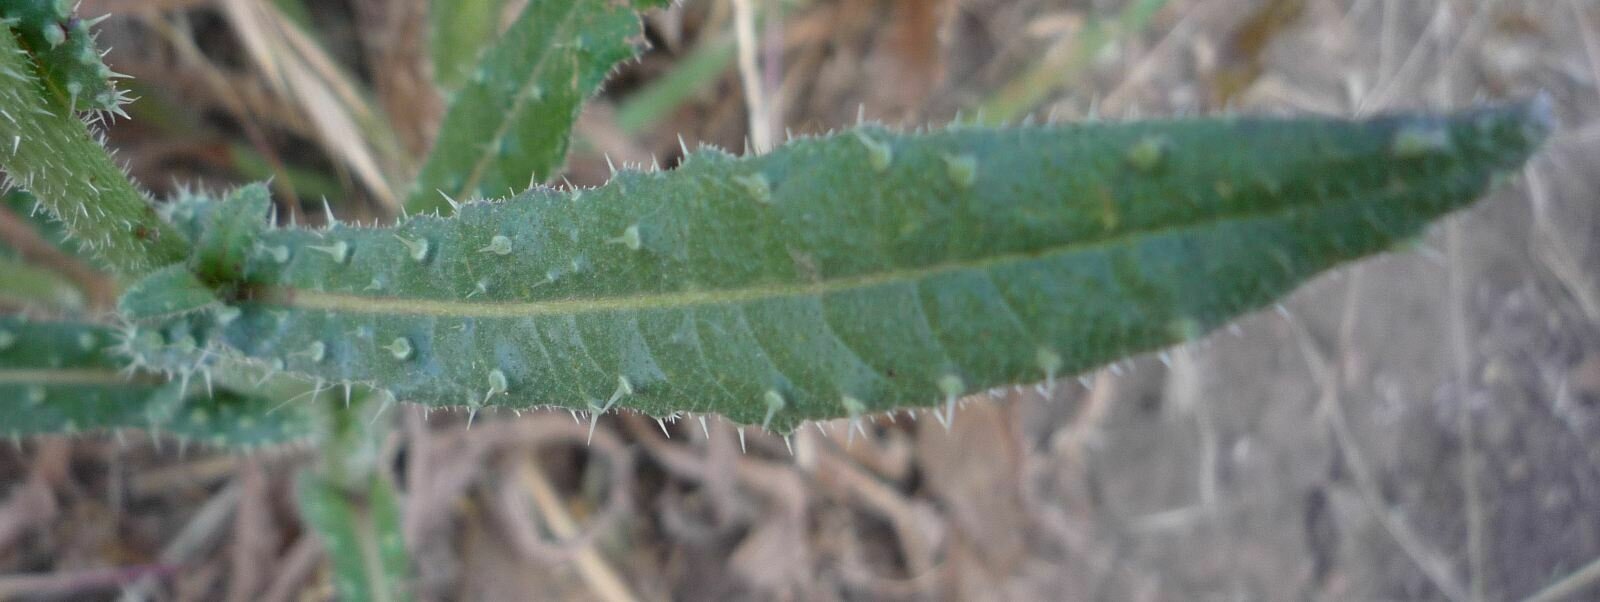 High Resolution Picris echioides Leaf